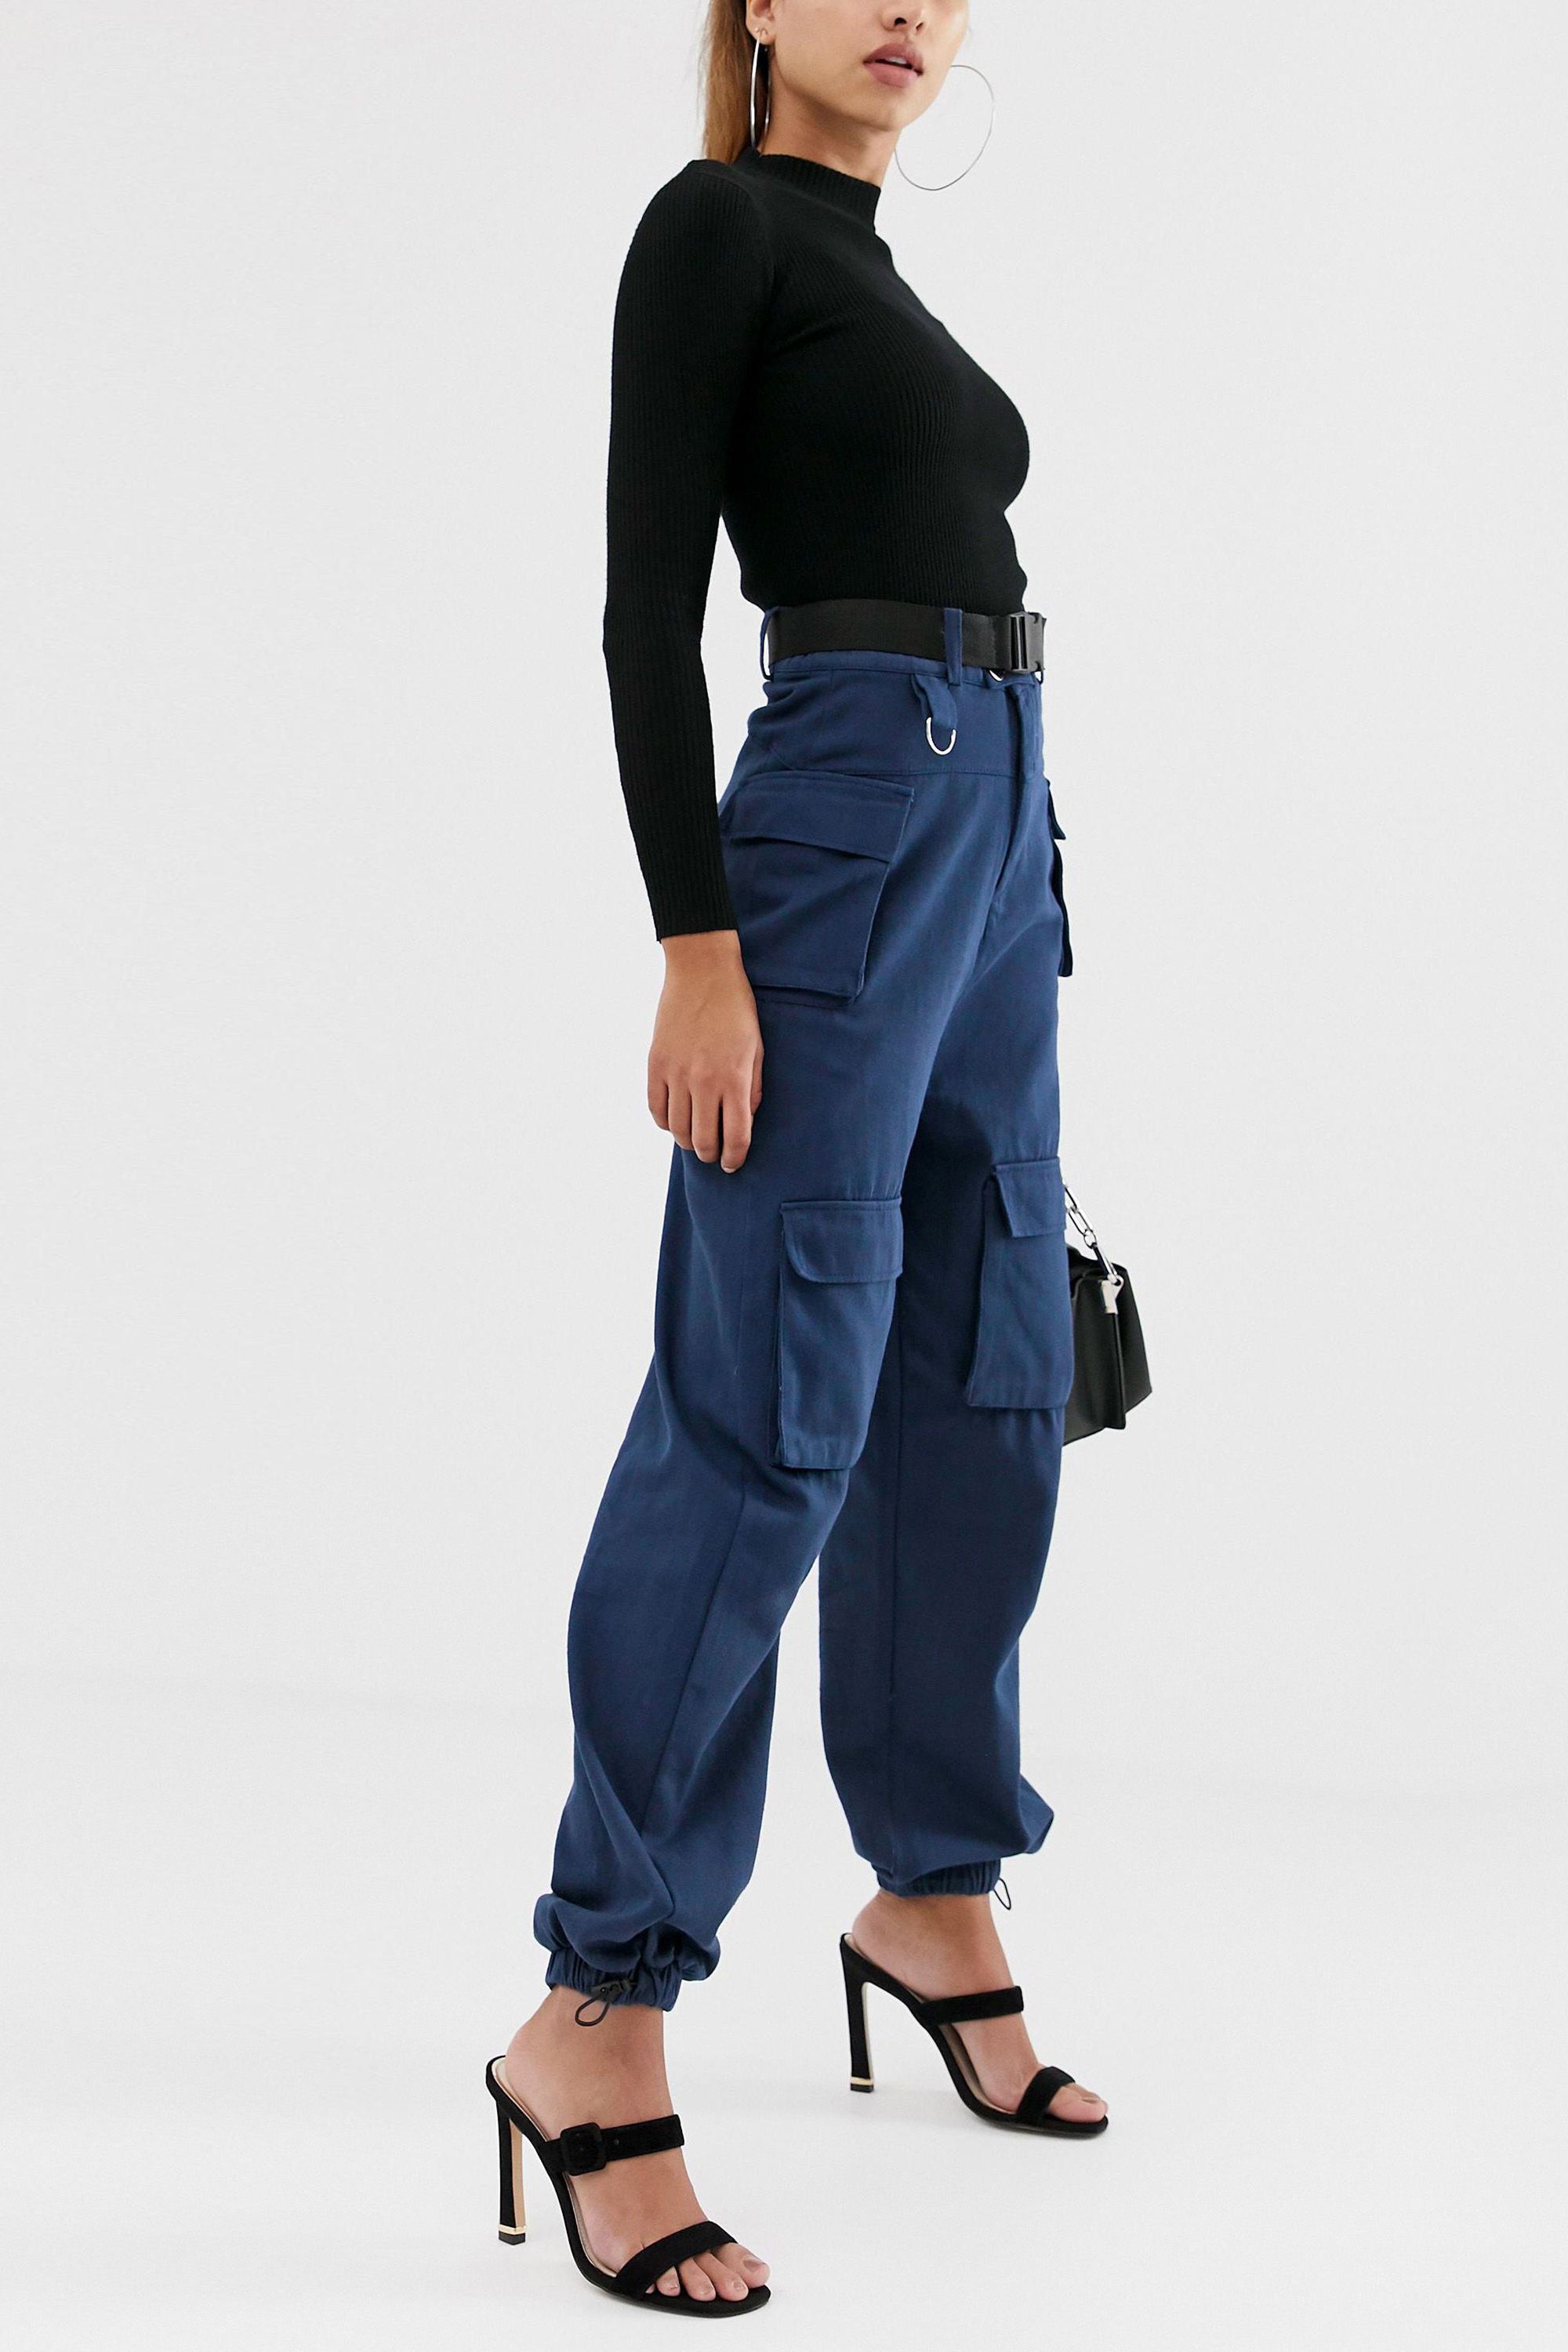 Cheap utility pants outfit ideas big sale  OFF 64